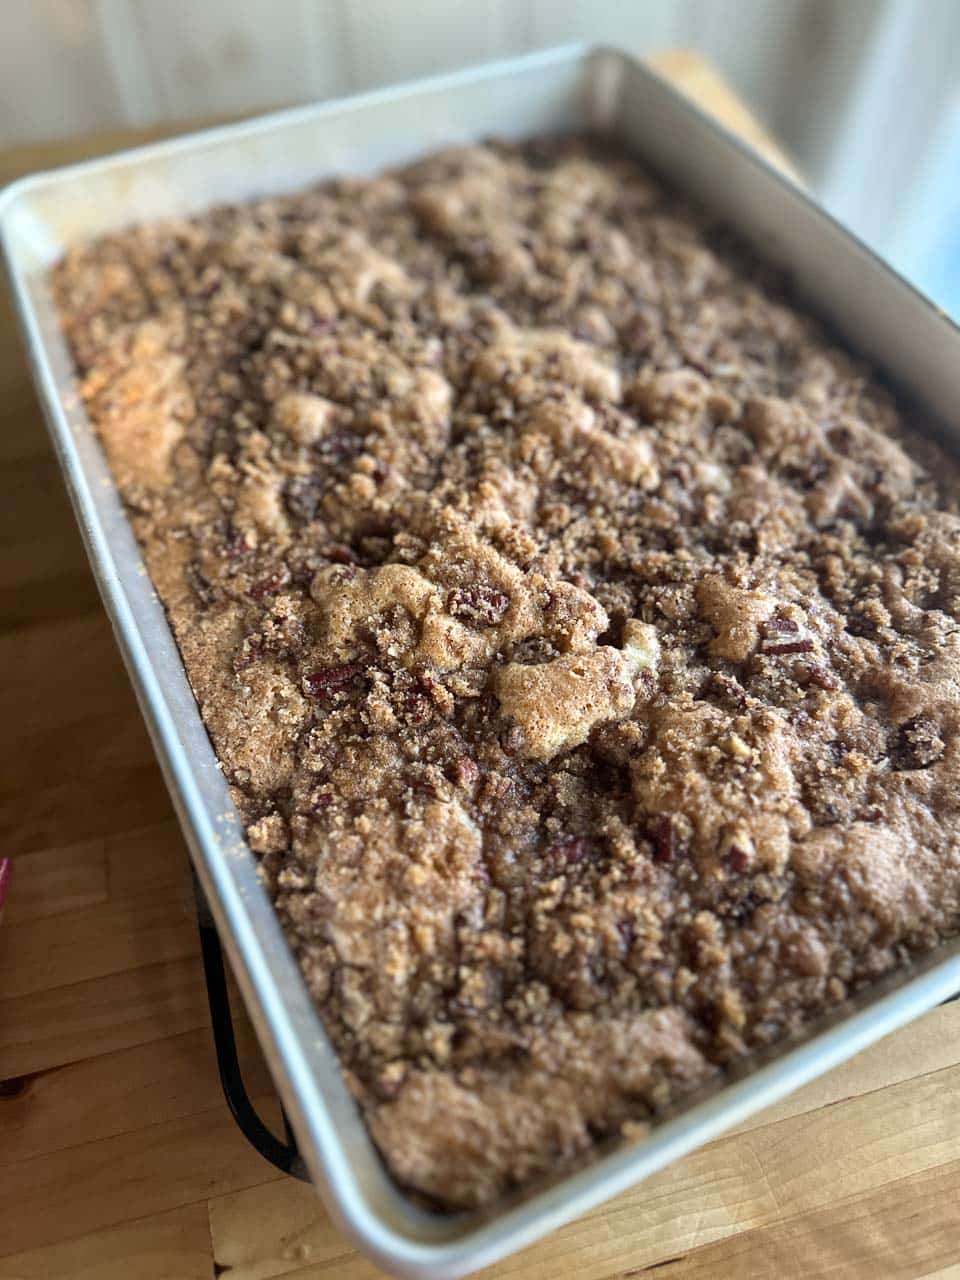 brown sugar pecan streusel topping over apple cake batter in pan before baking on rack.